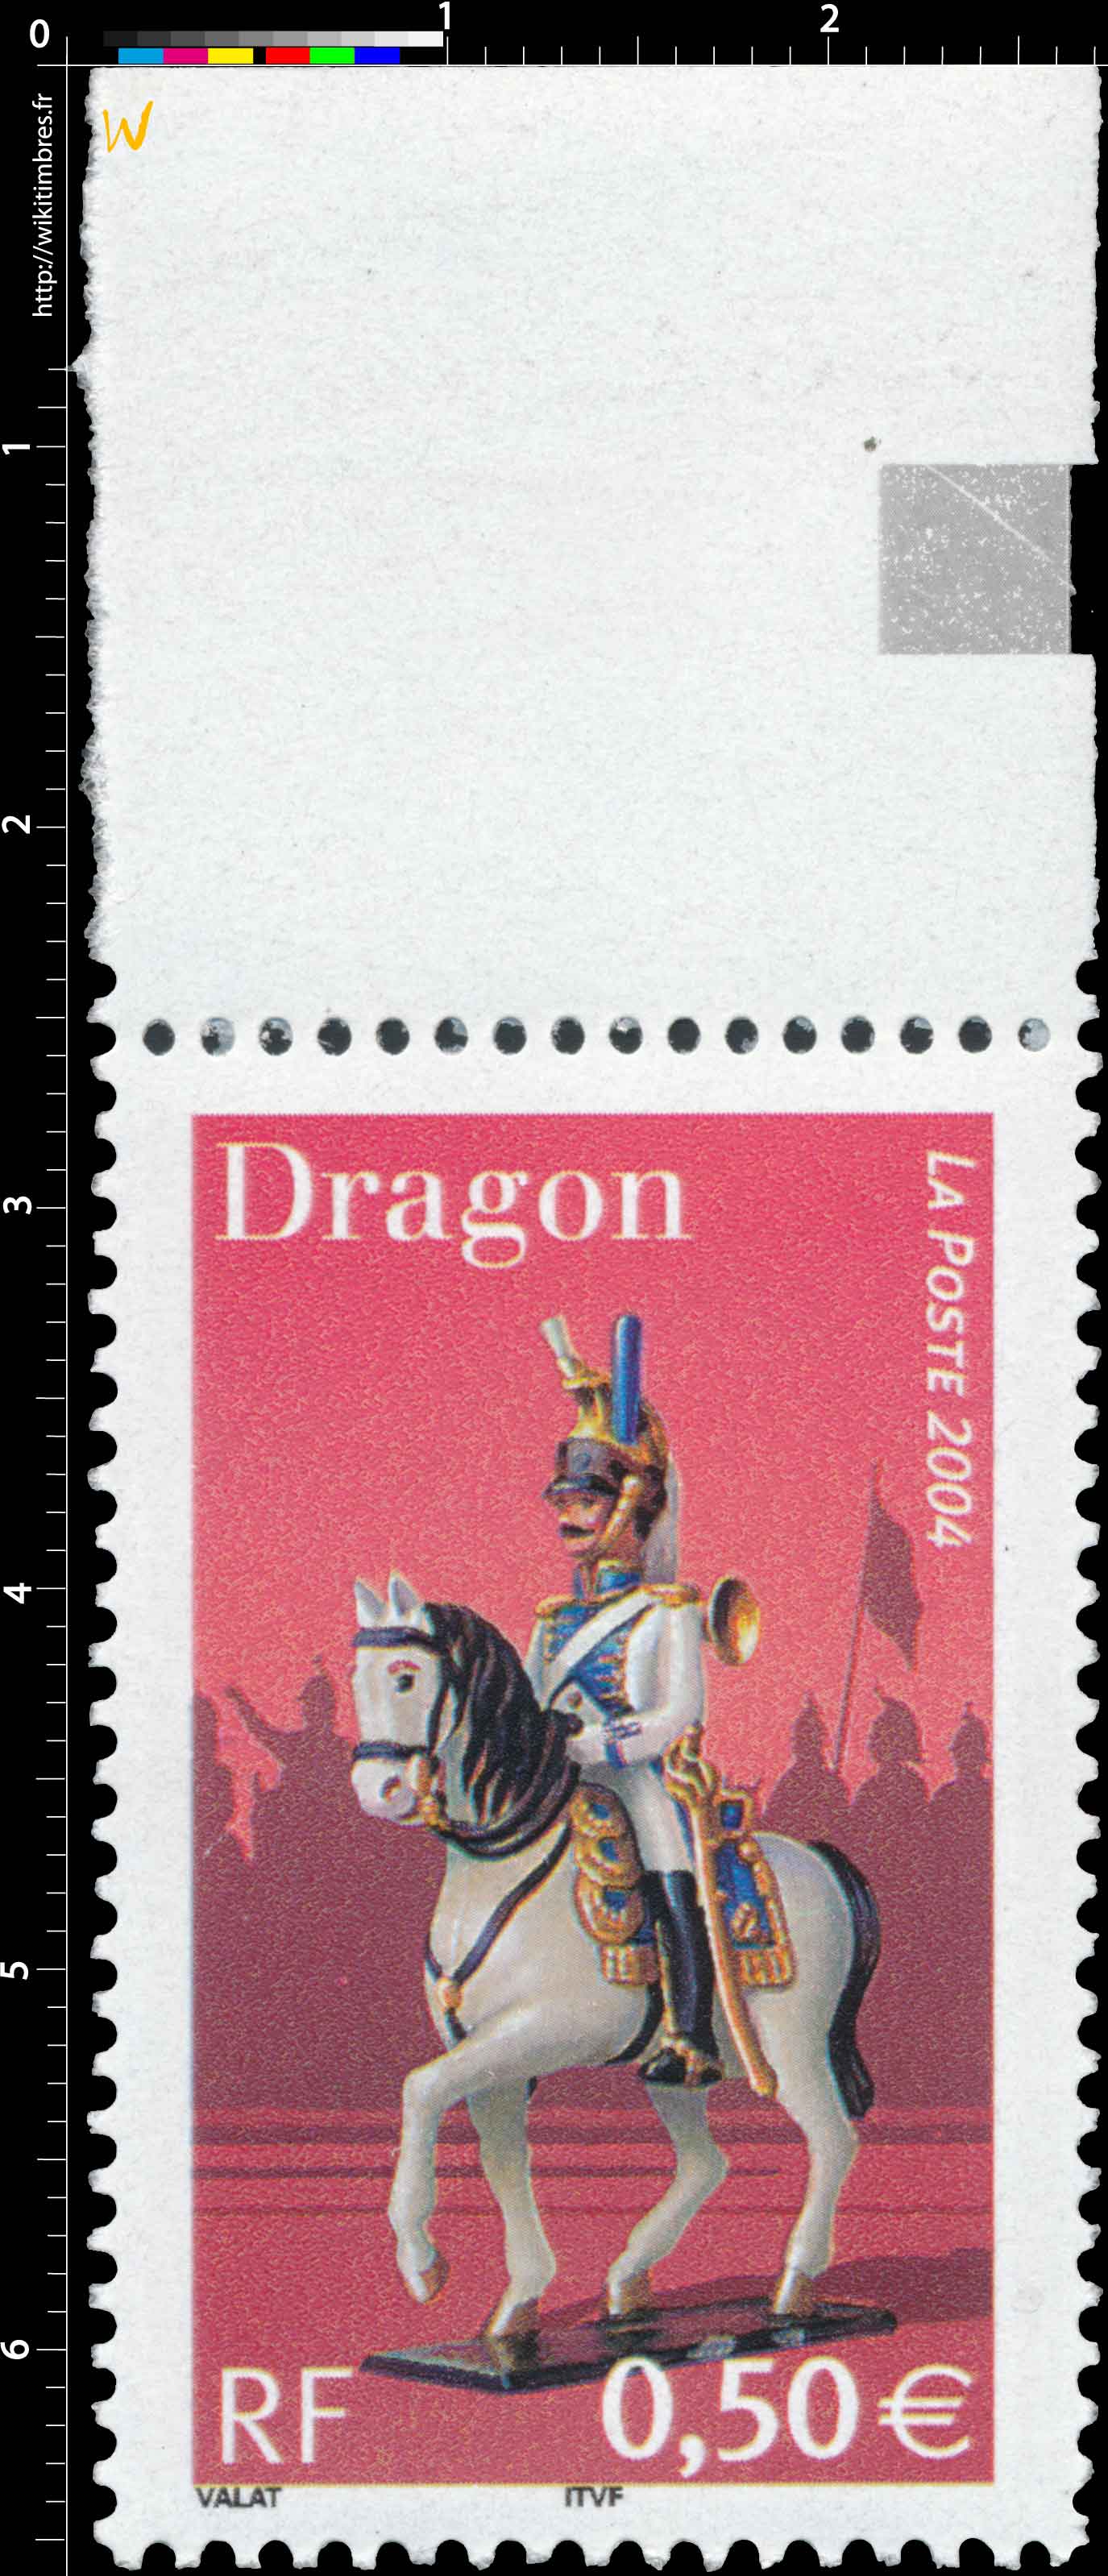 2004 Dragon